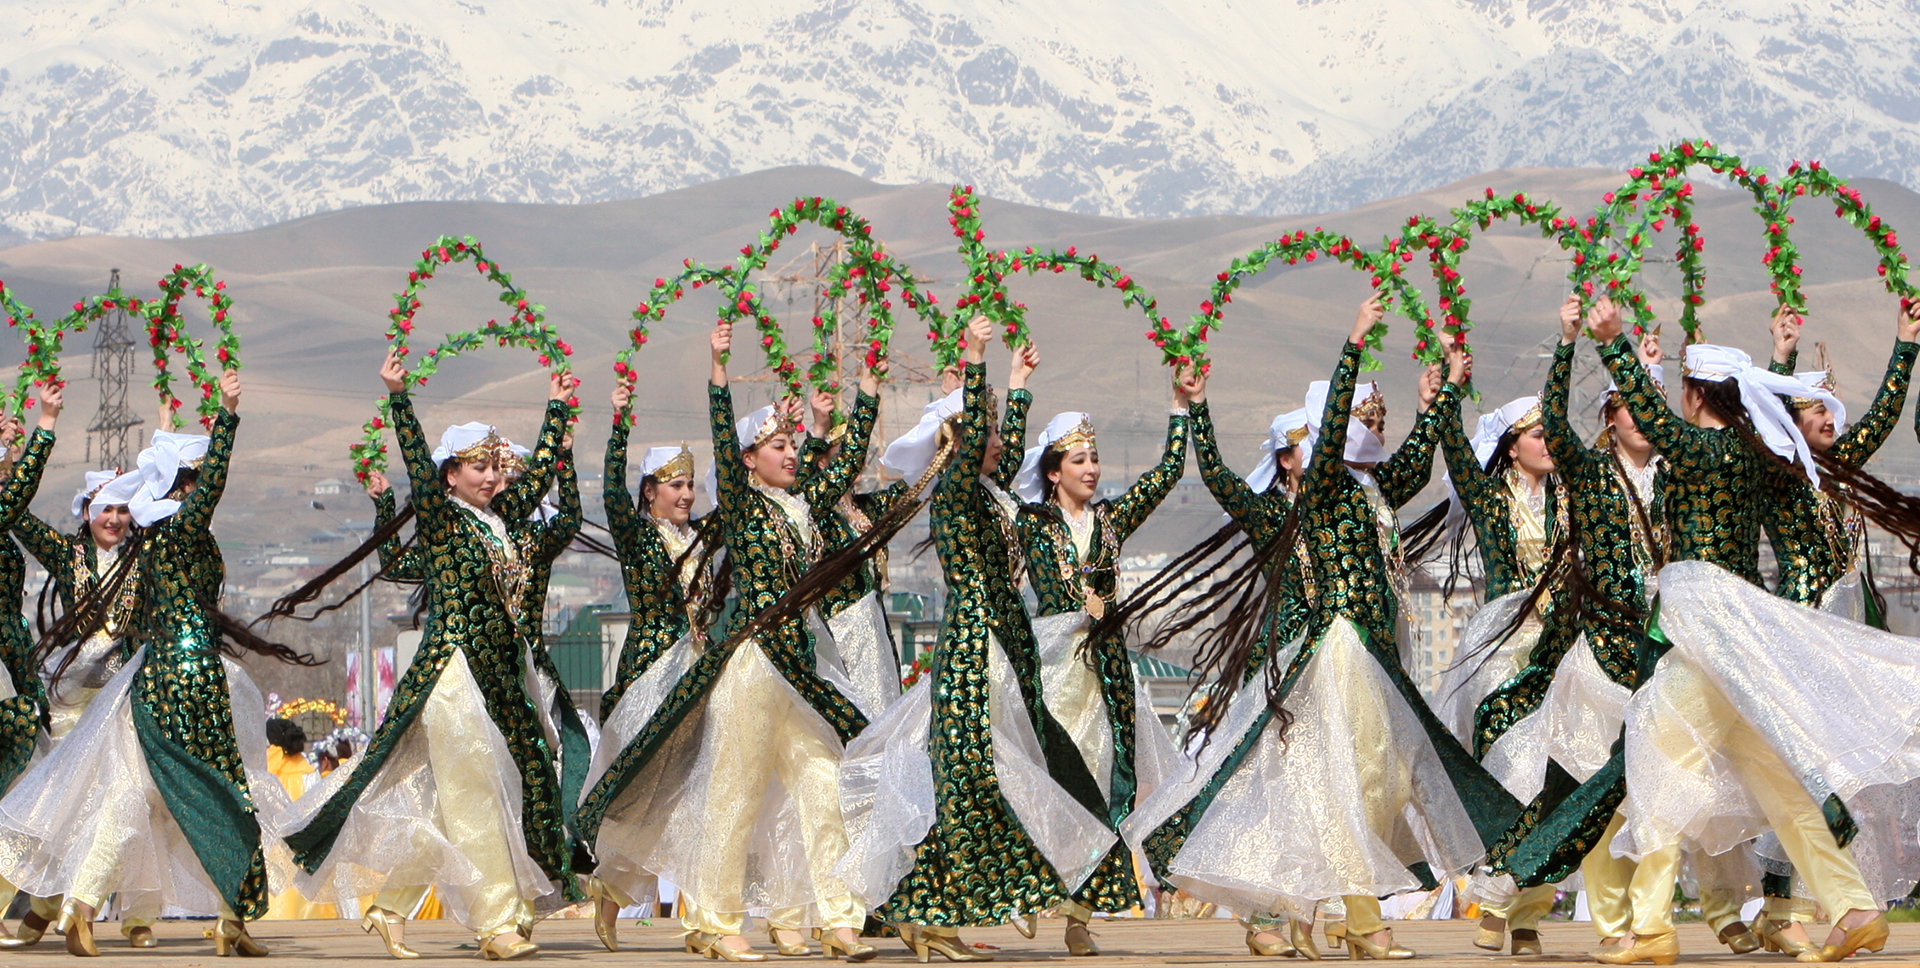 Do you know the sights of Tajikistan?